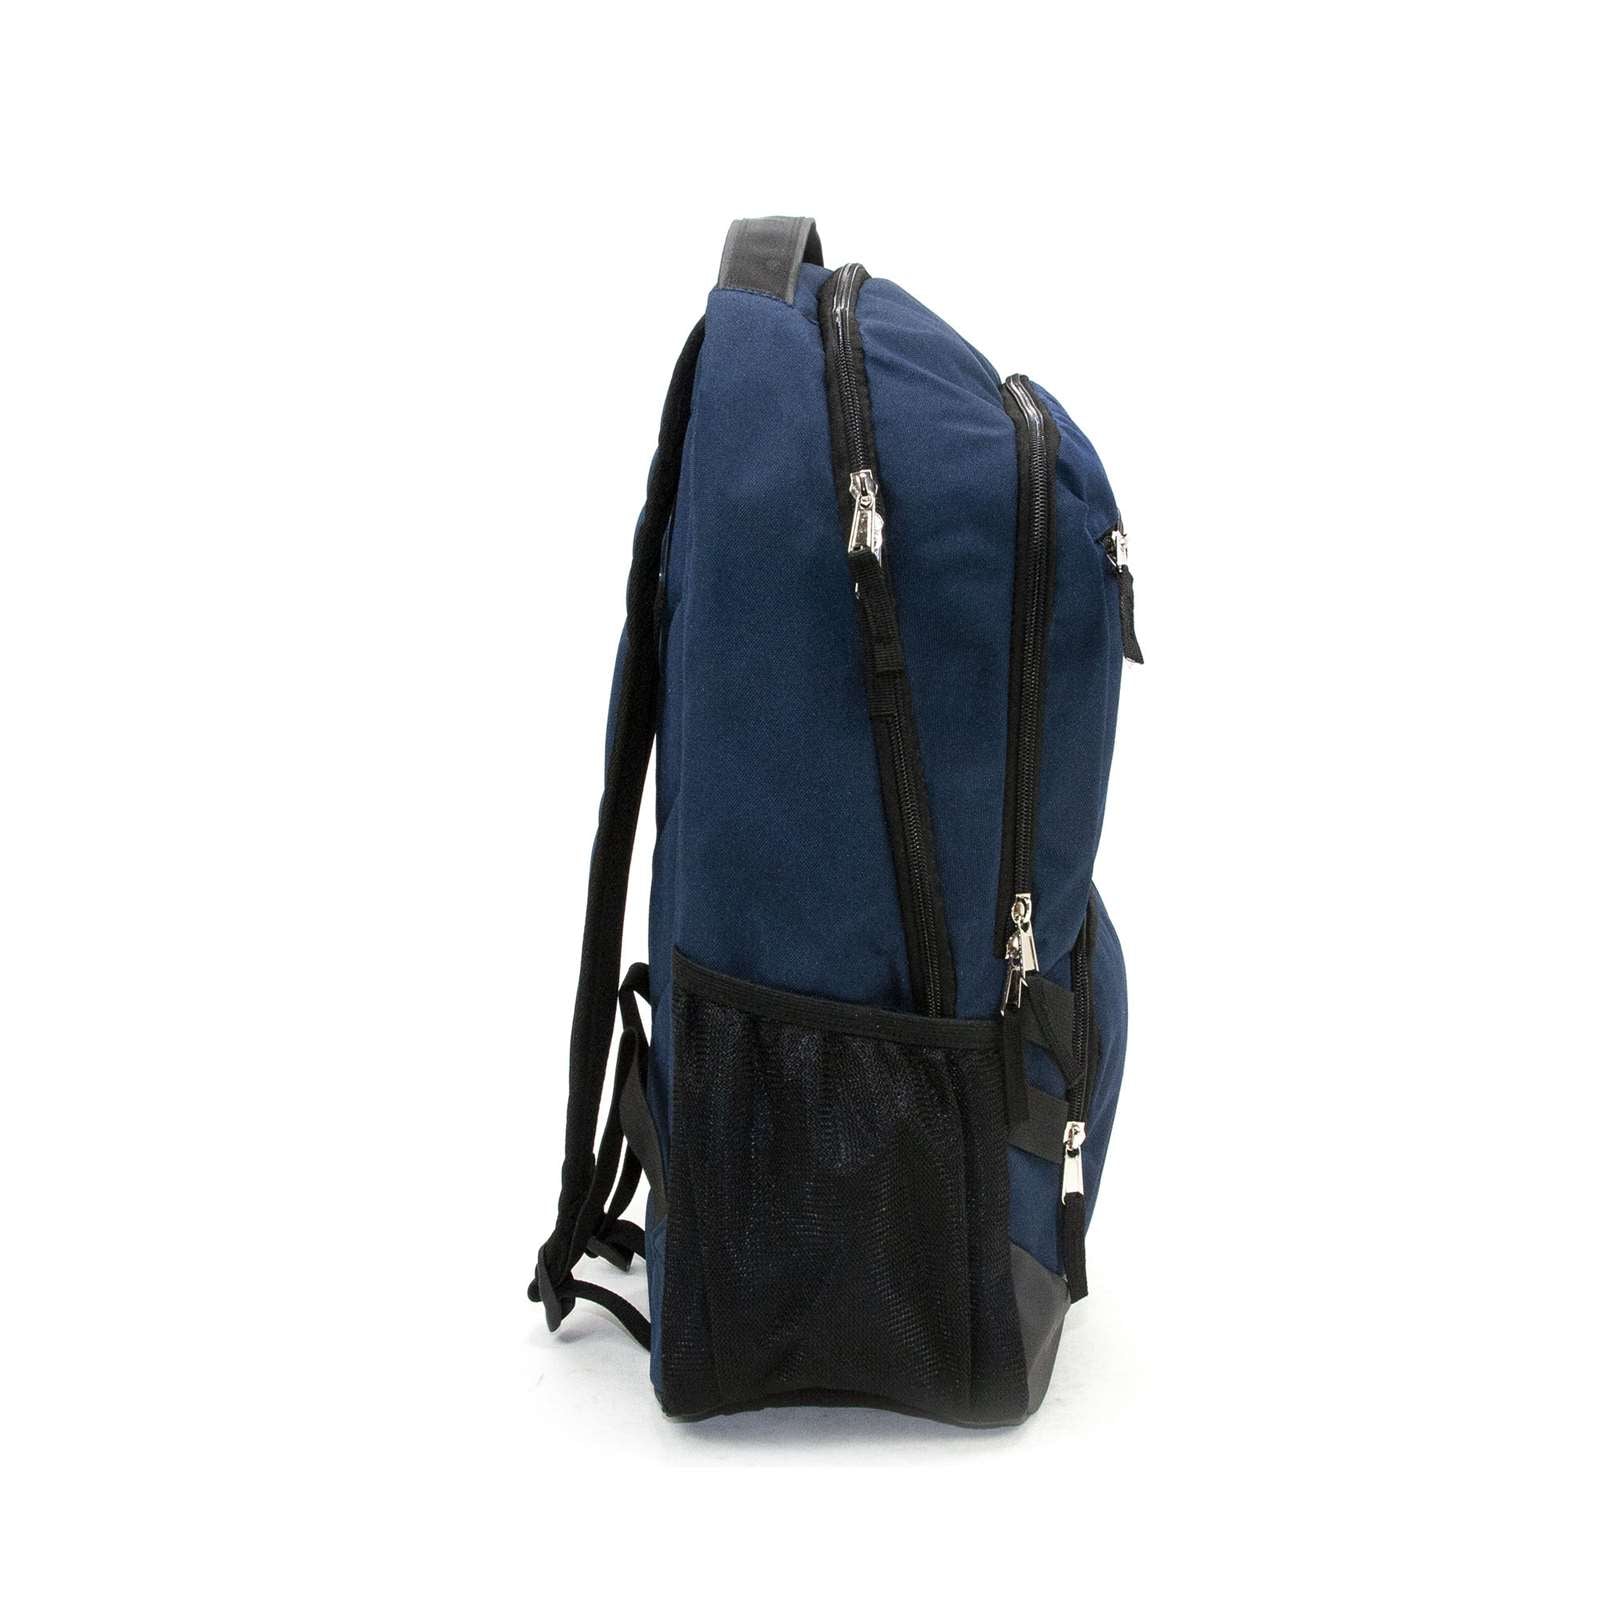 Hakki Men Carry-All Travel Everyday Laptop Backpack